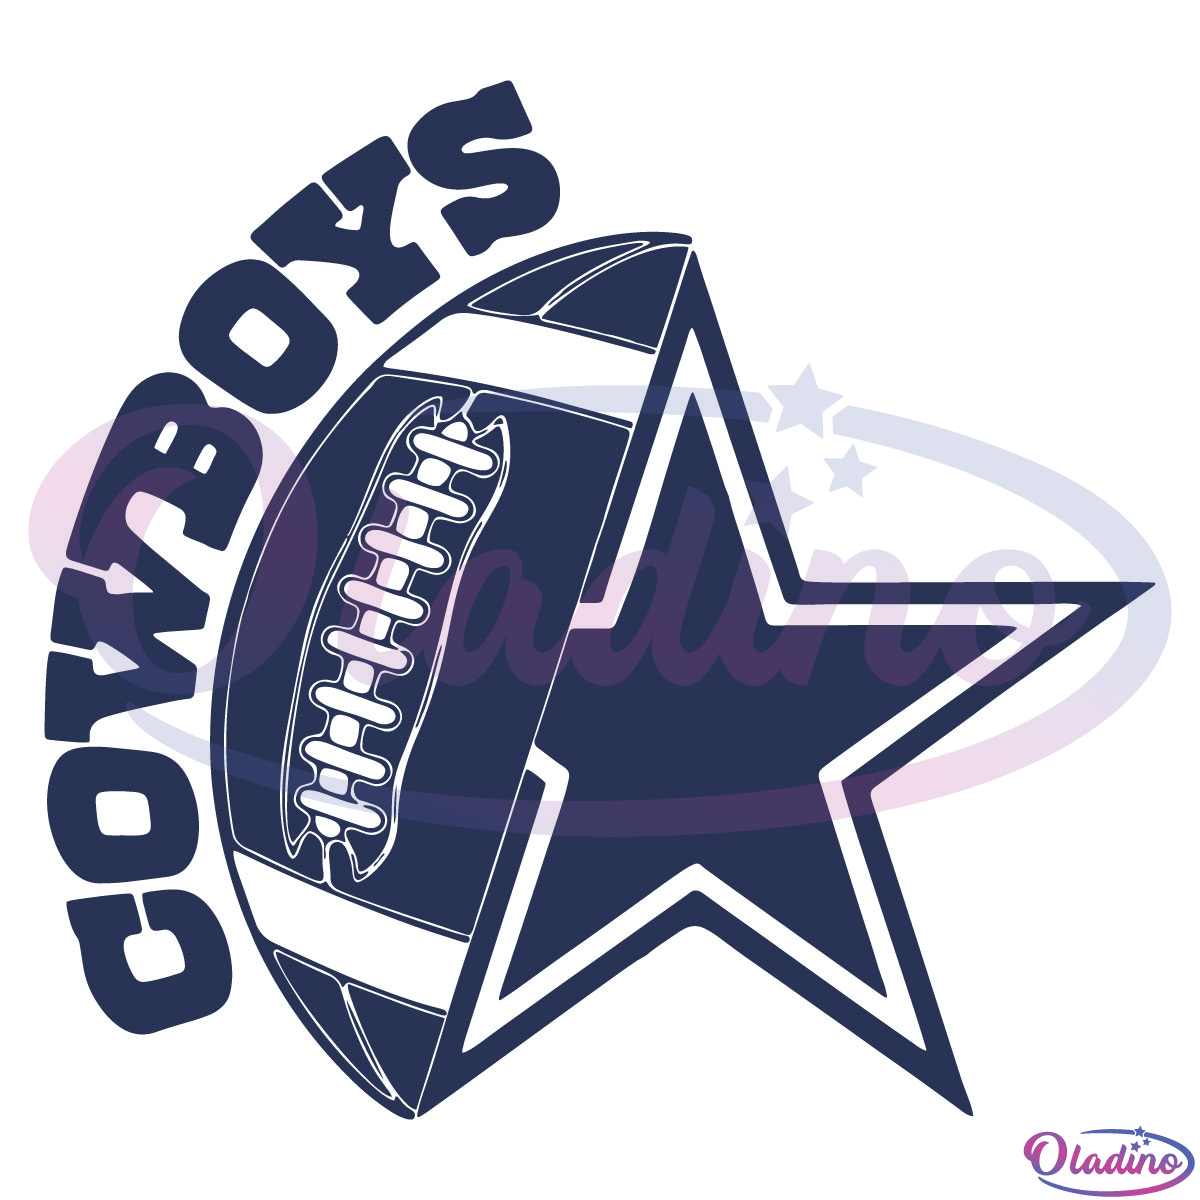 Cowboys Logo